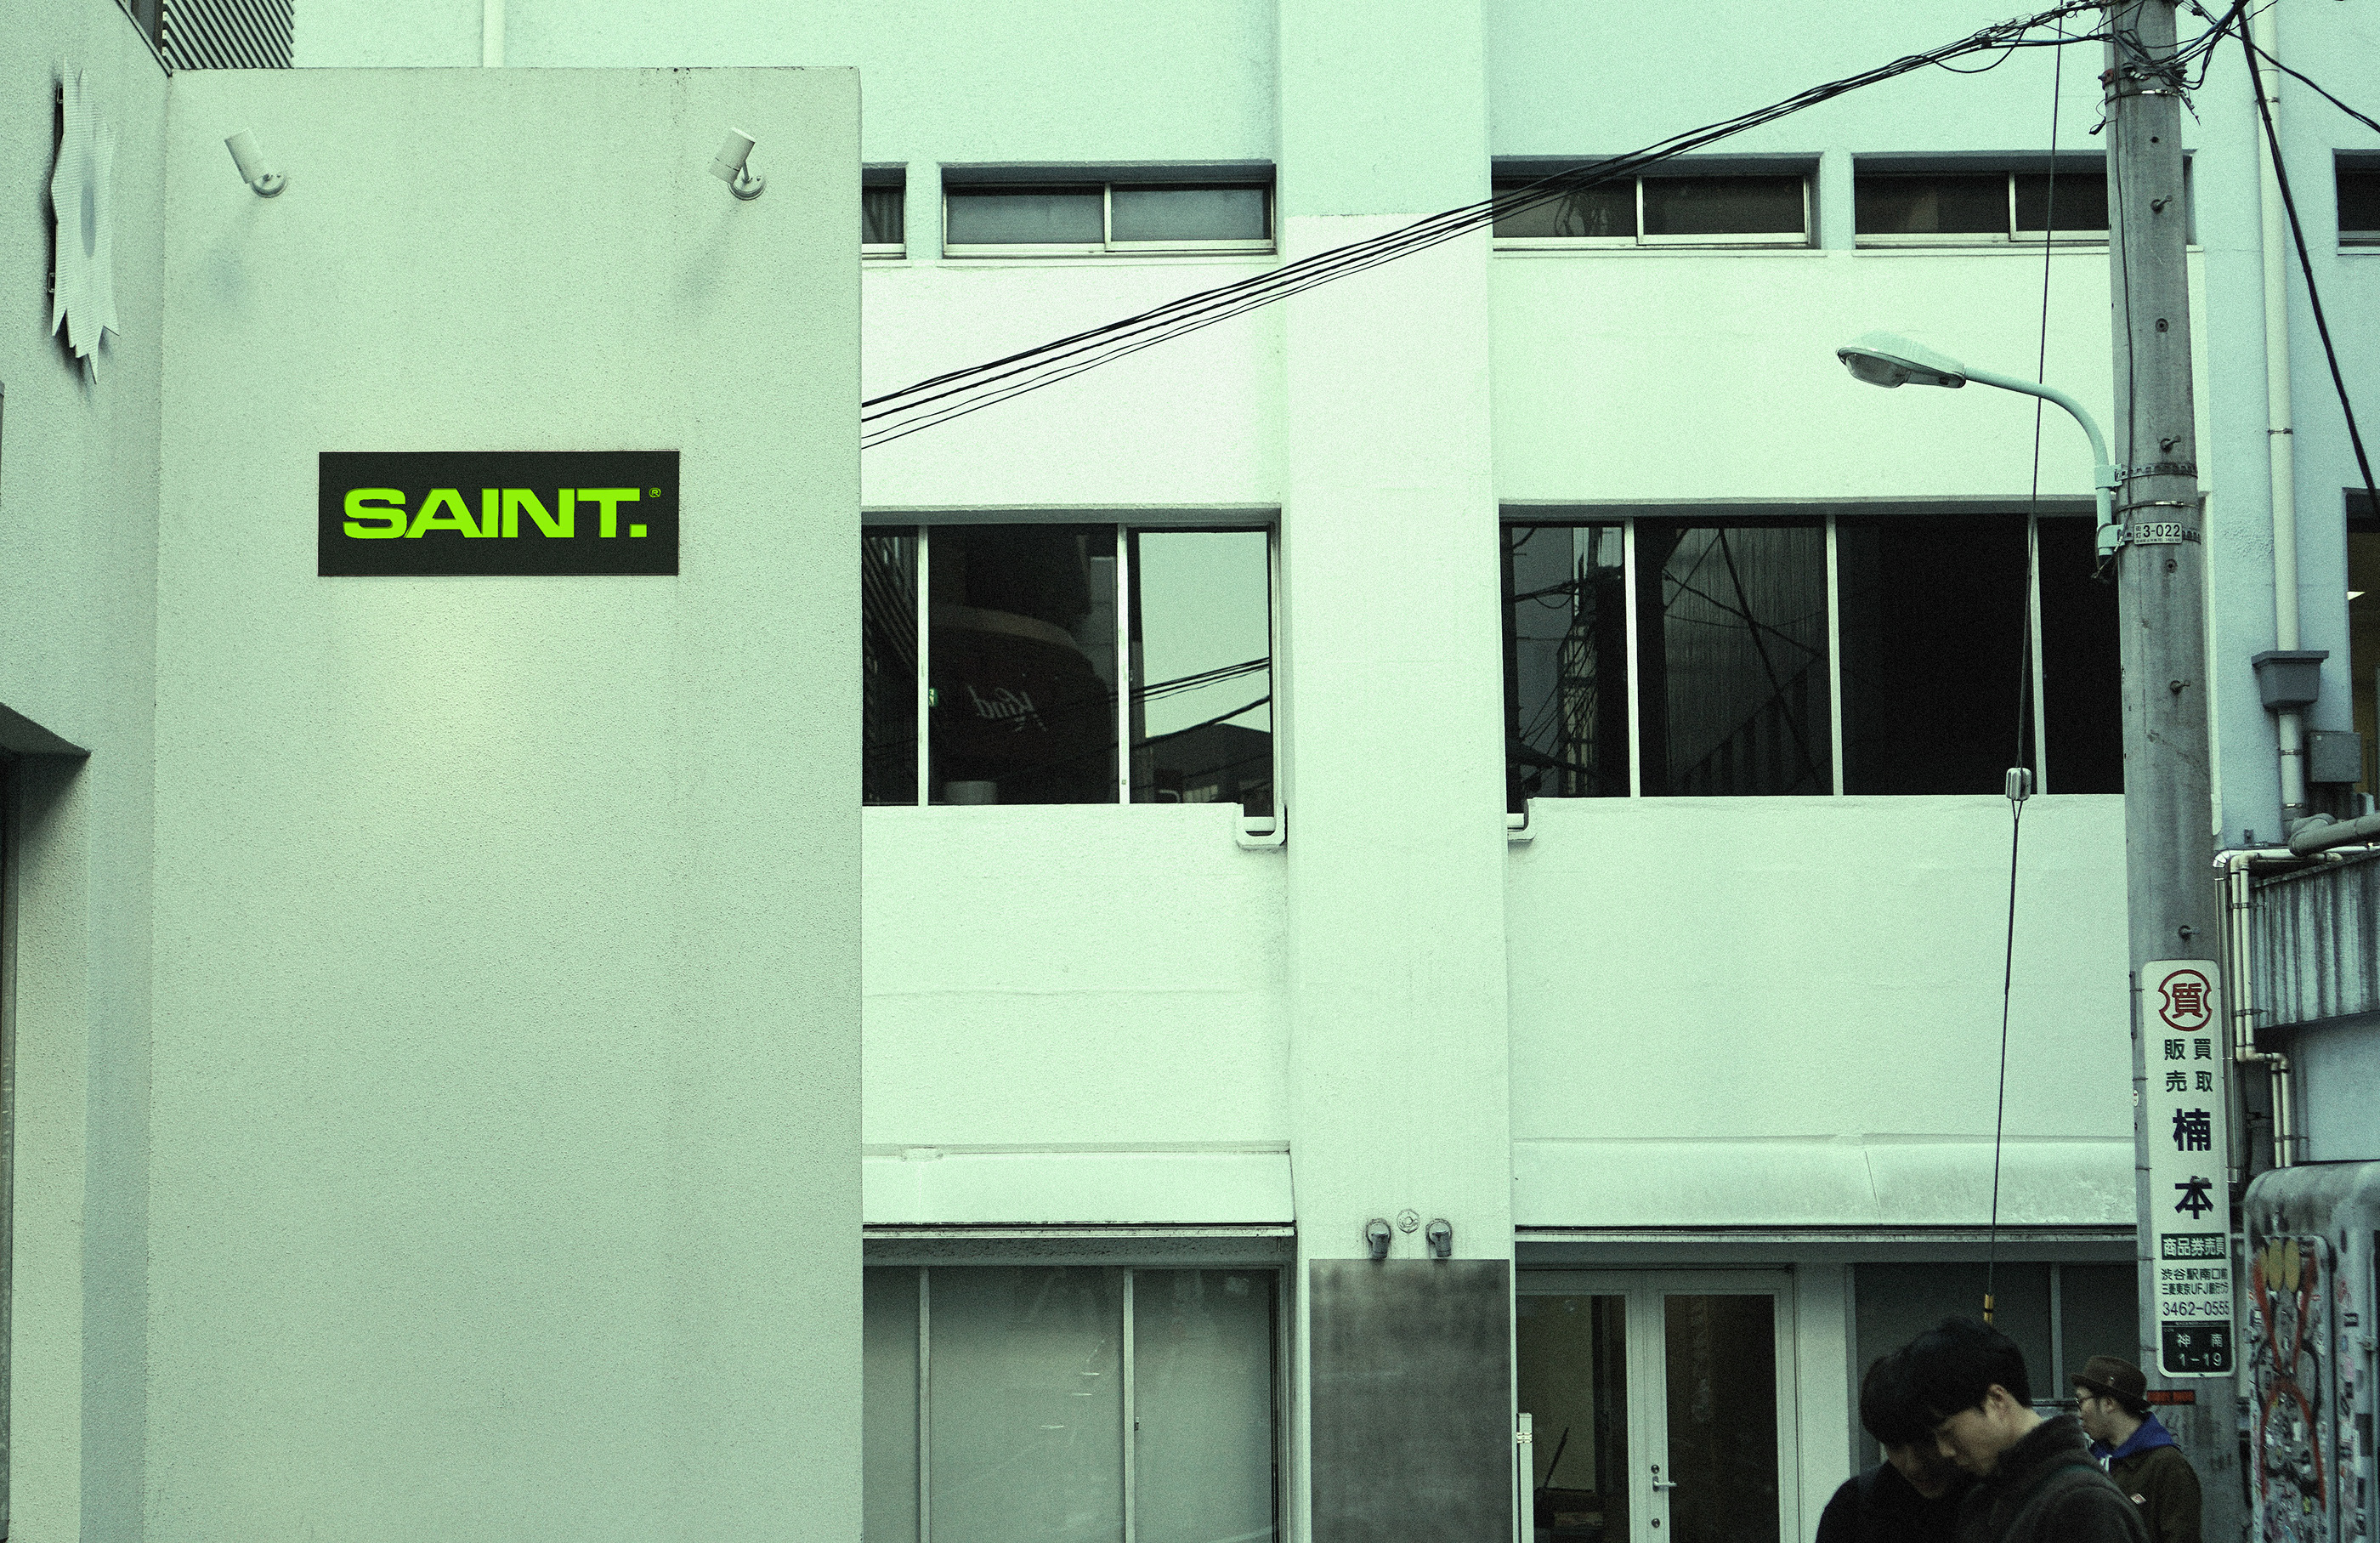 SAINT - First Block Digital Agency